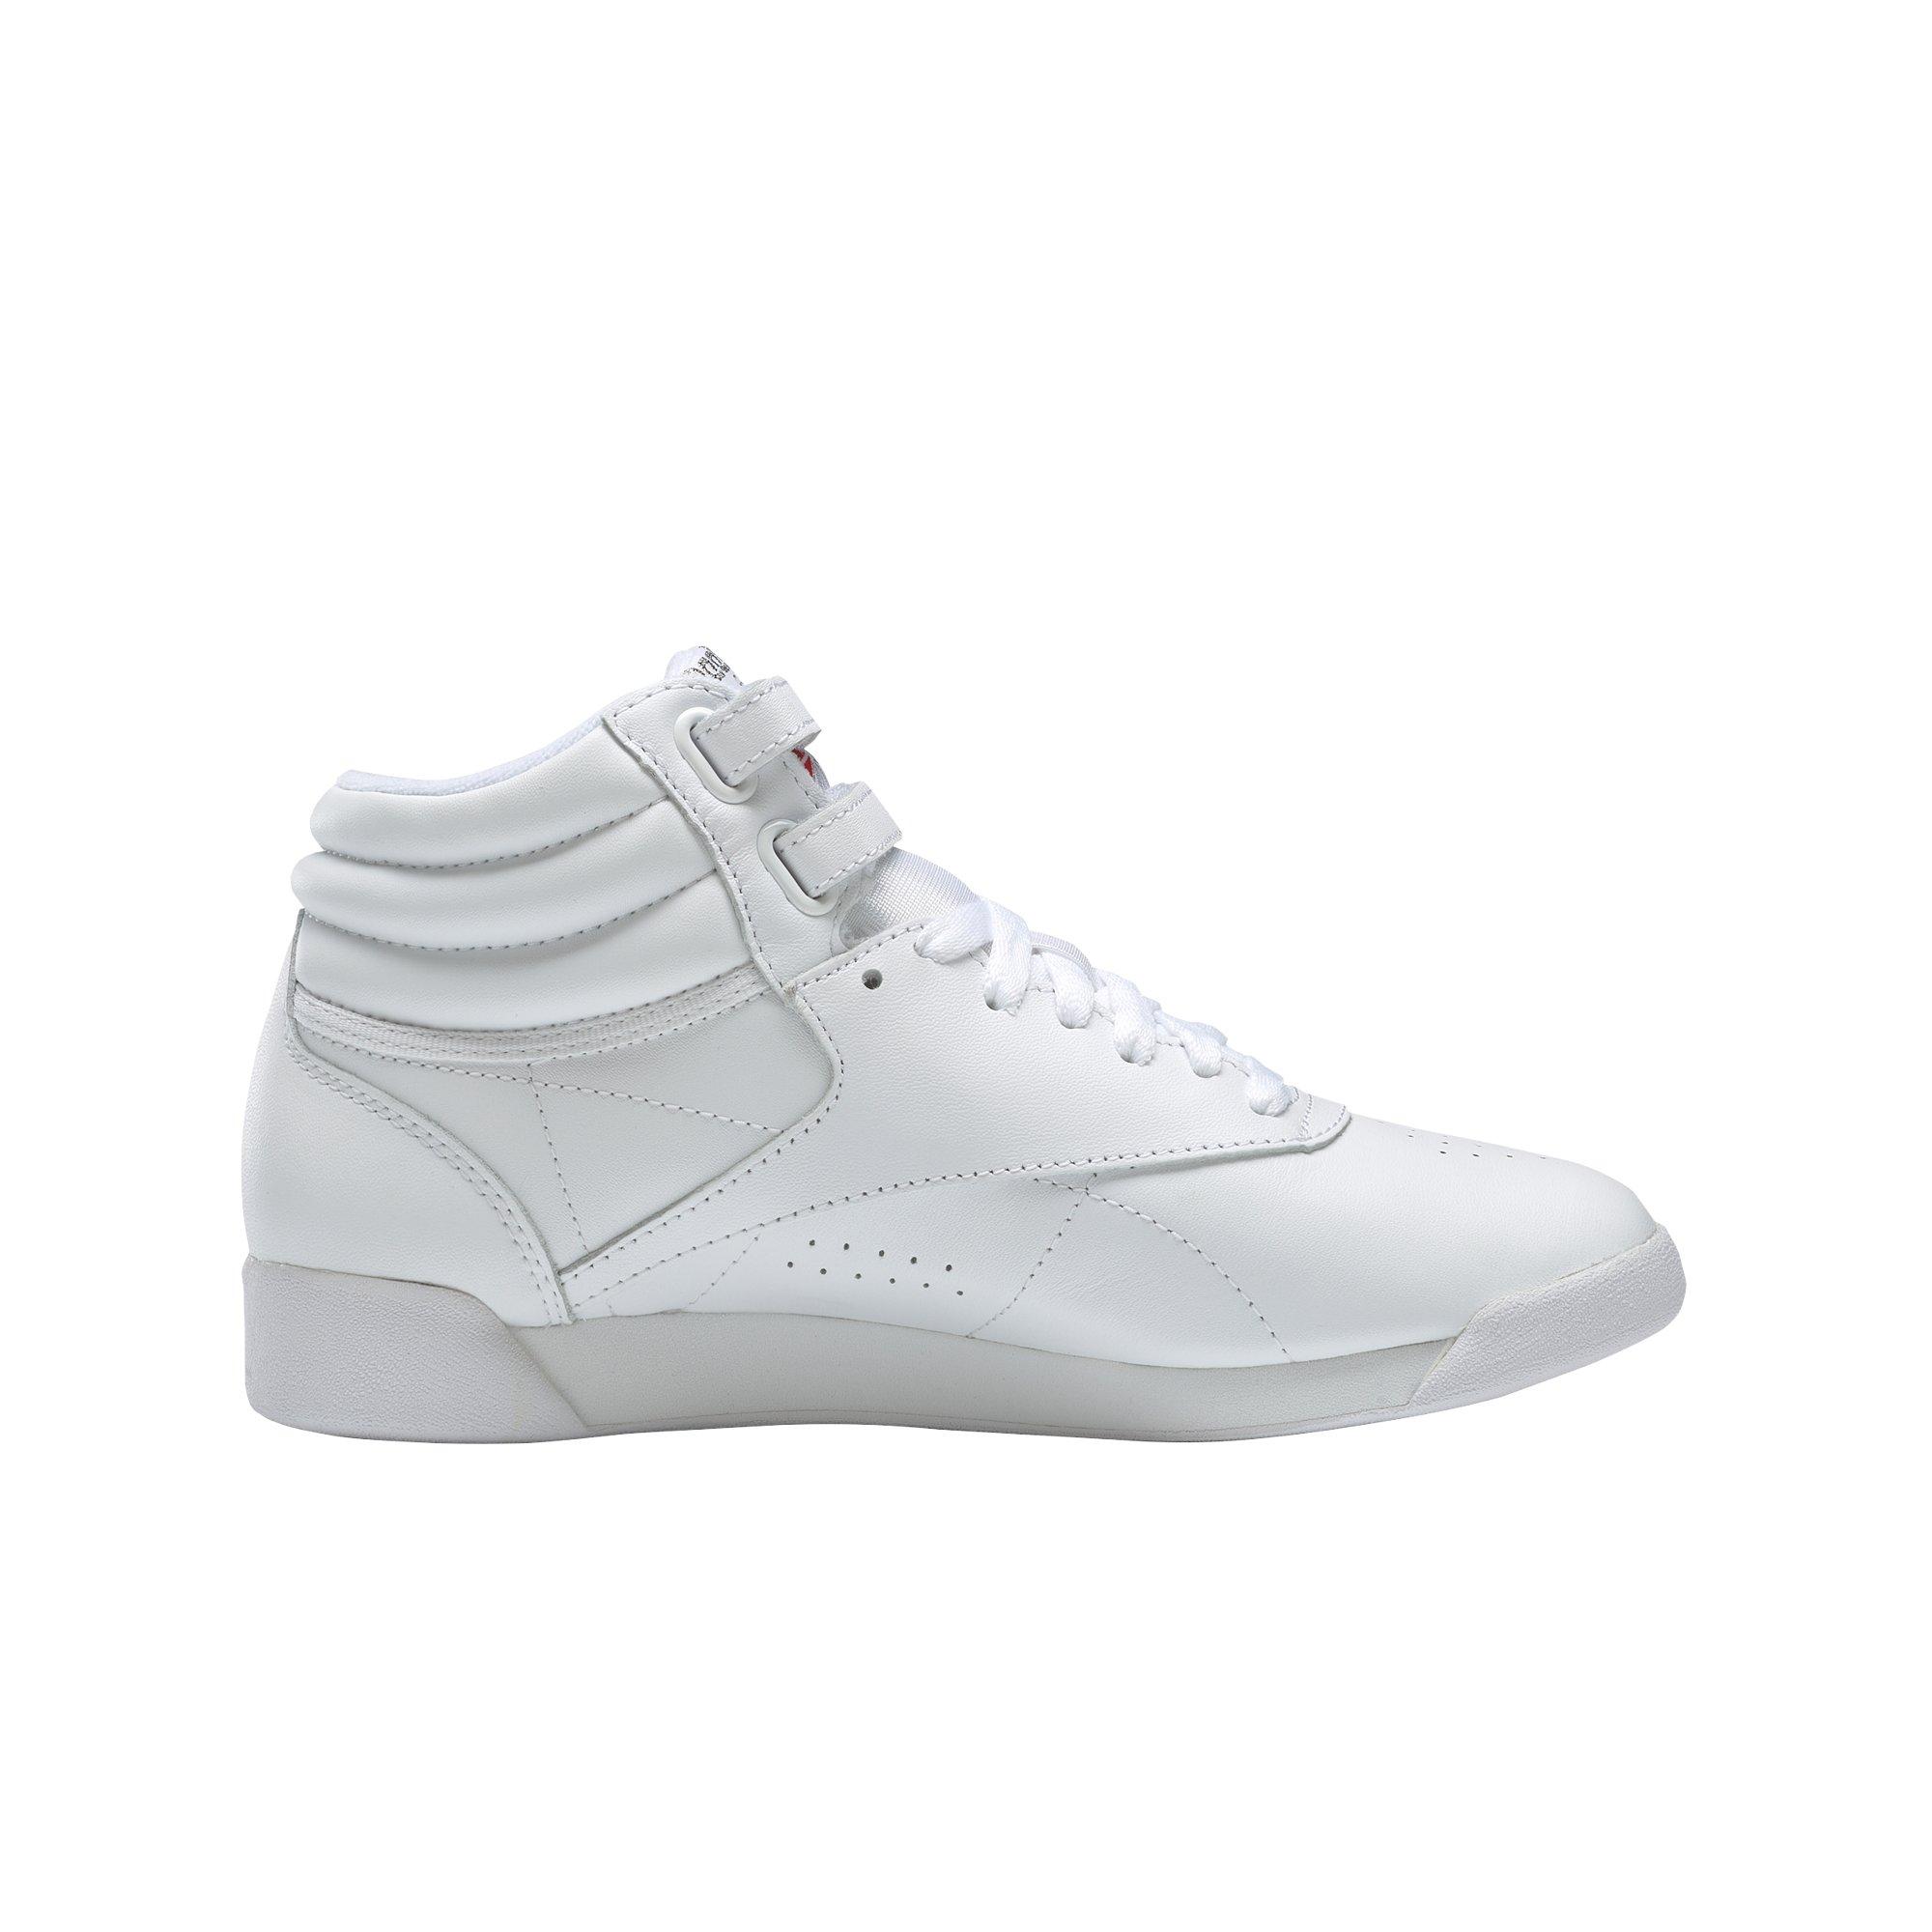 Freestyle Hi "White/Silver" Women's Shoe